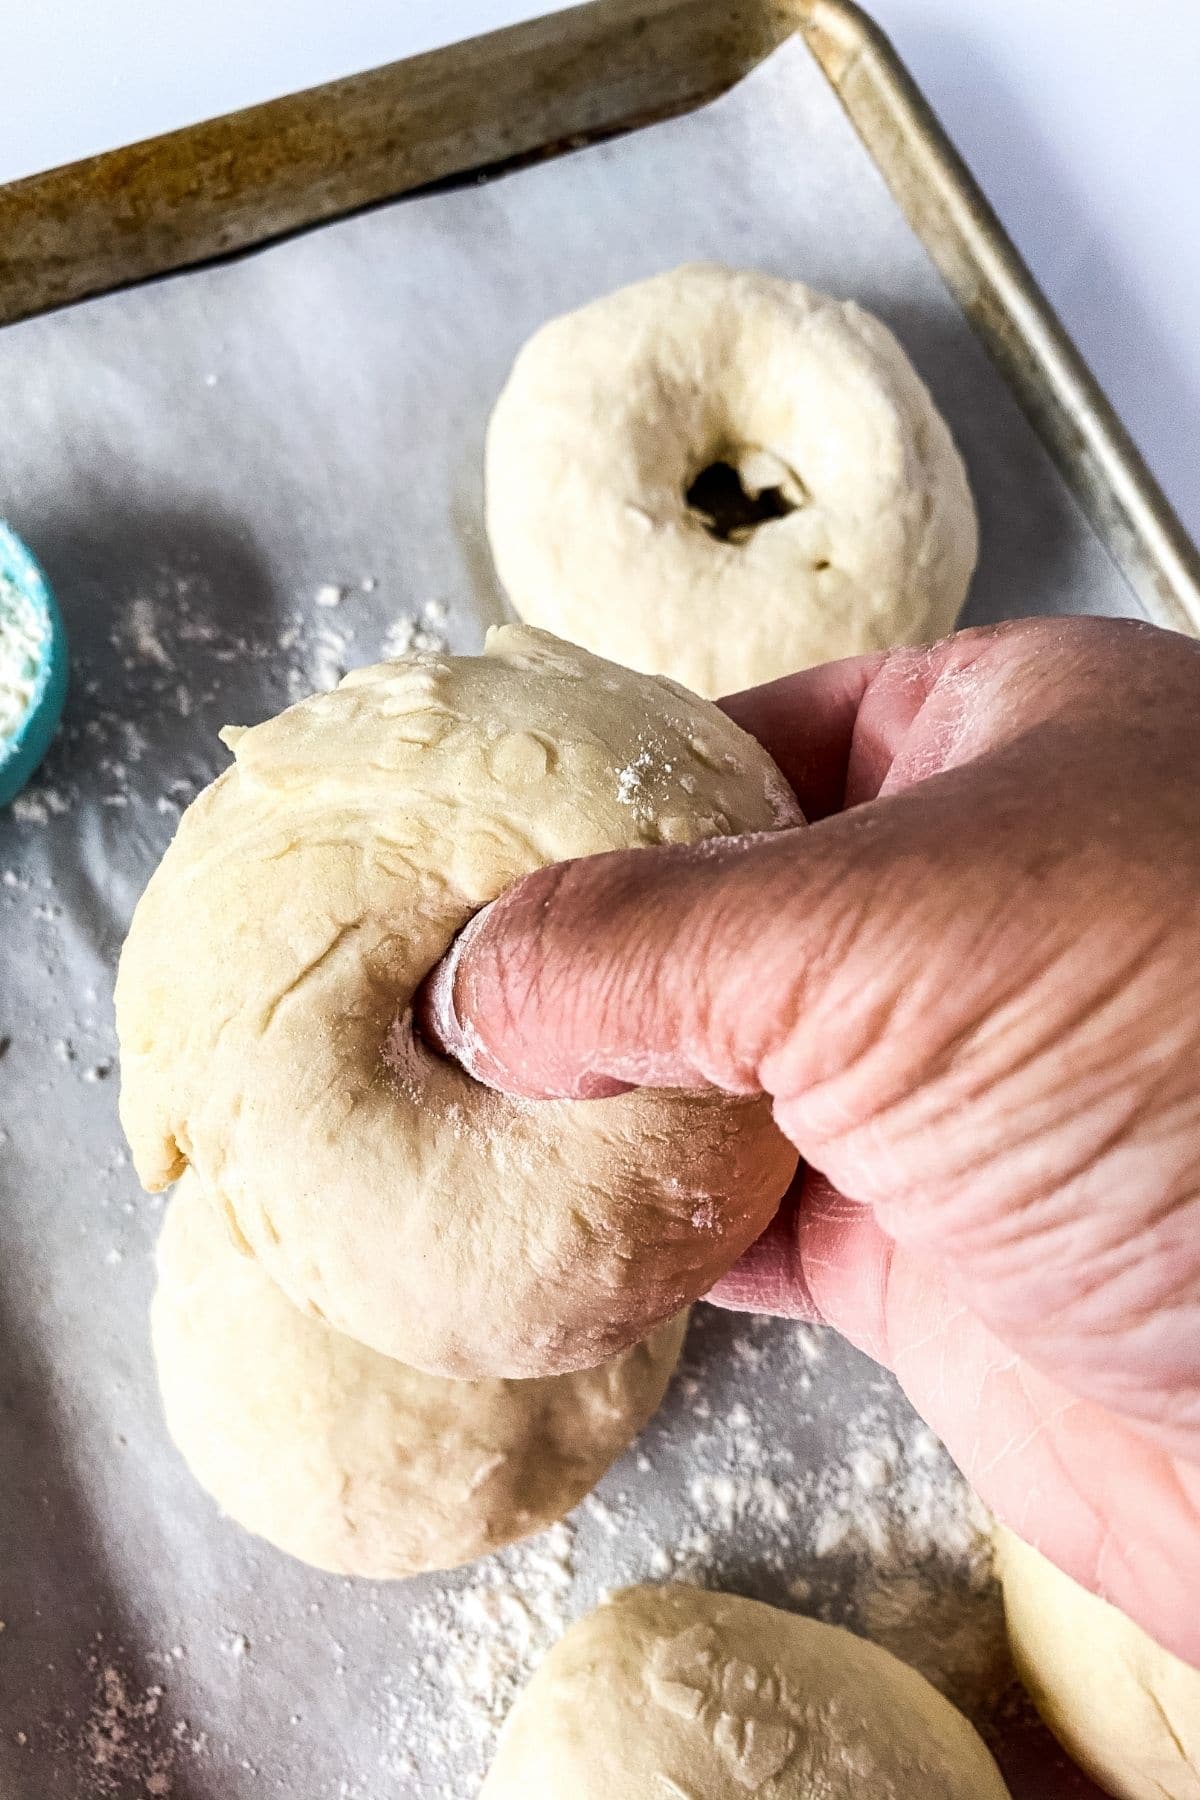 Forming bagels